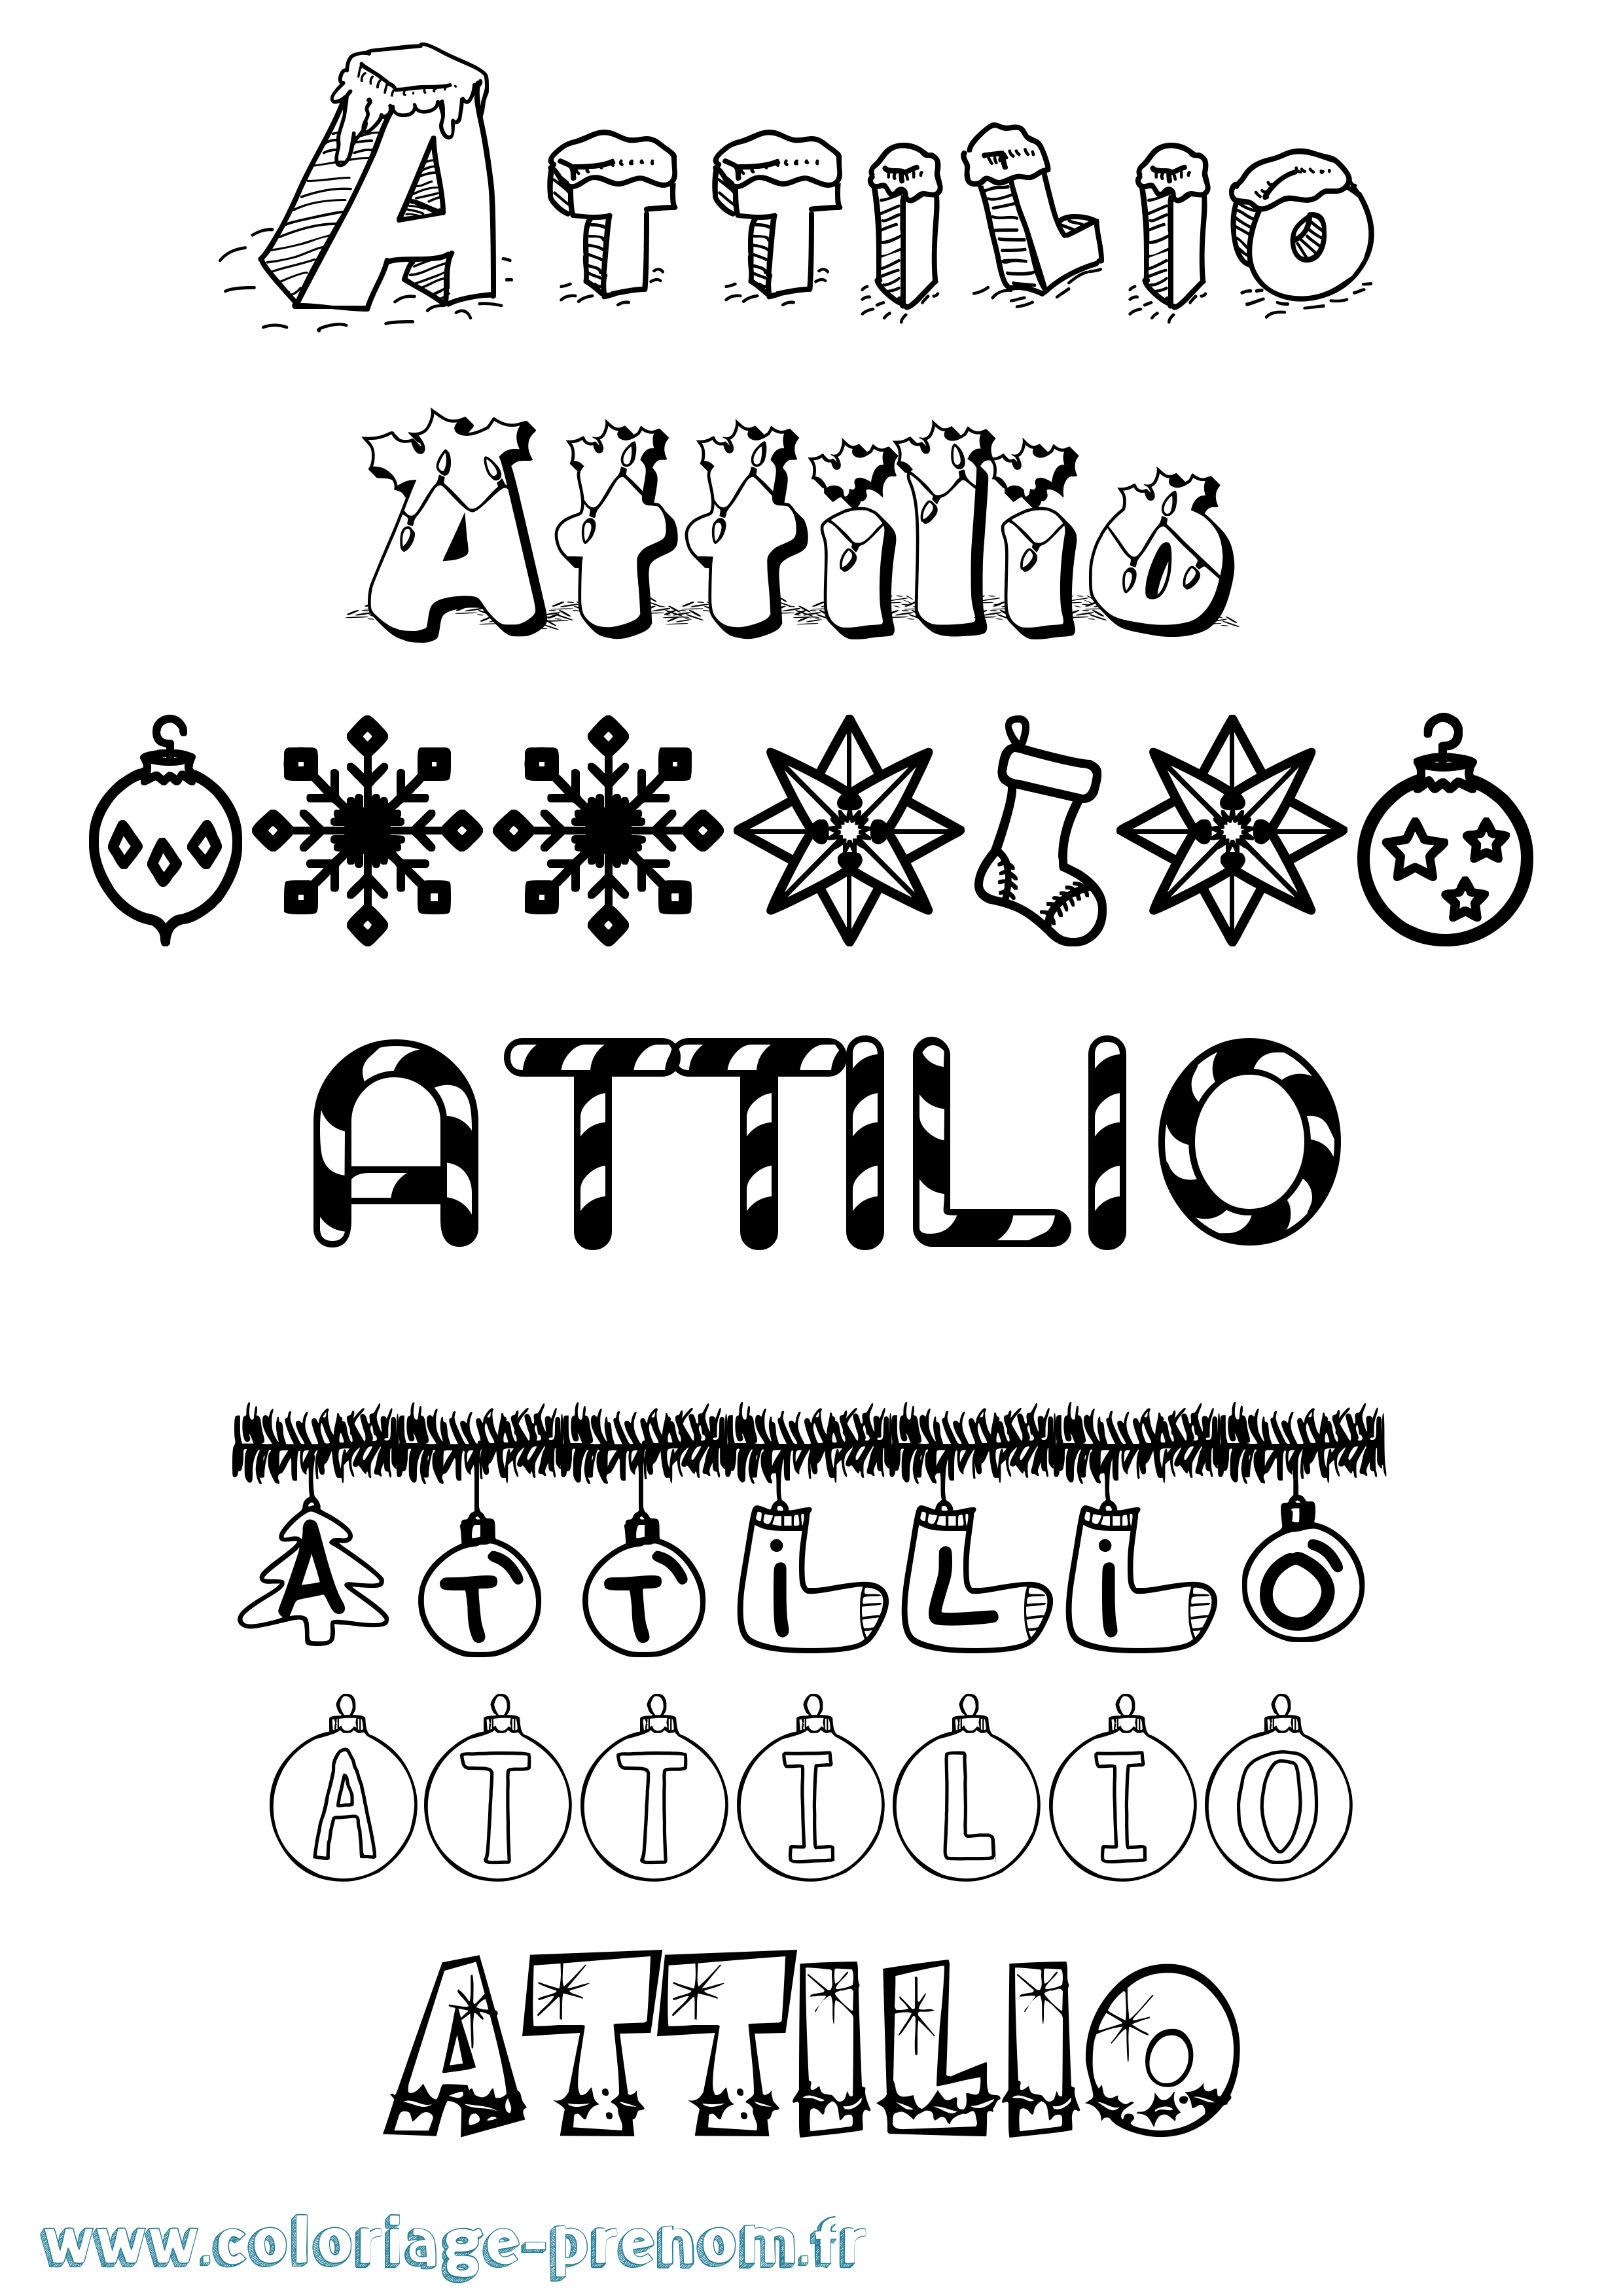 Coloriage prénom Attilio Noël